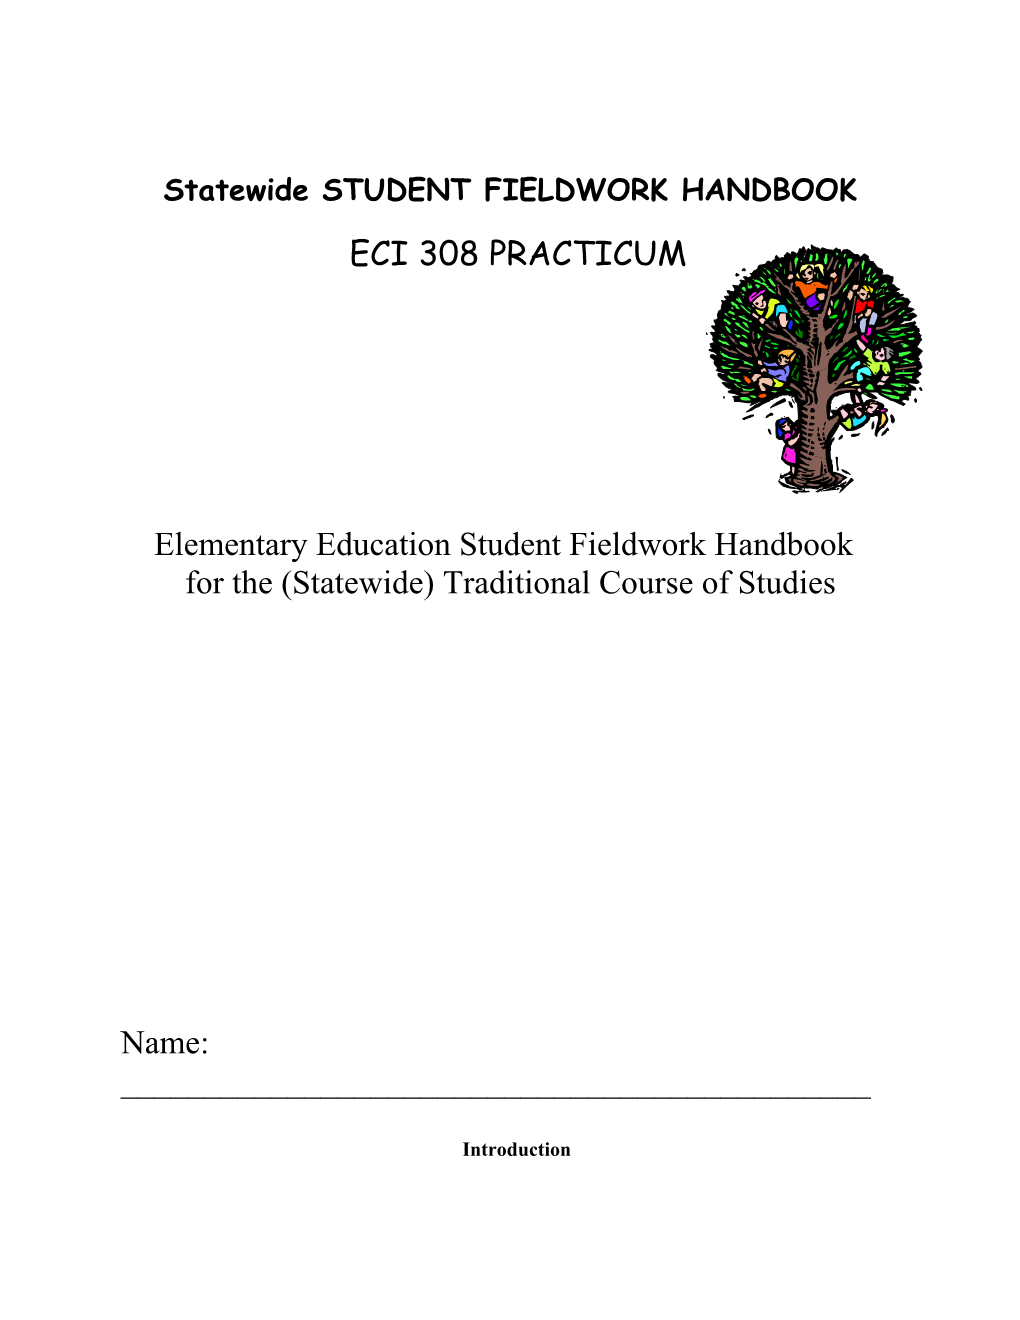 Student Fieldwork Handbook